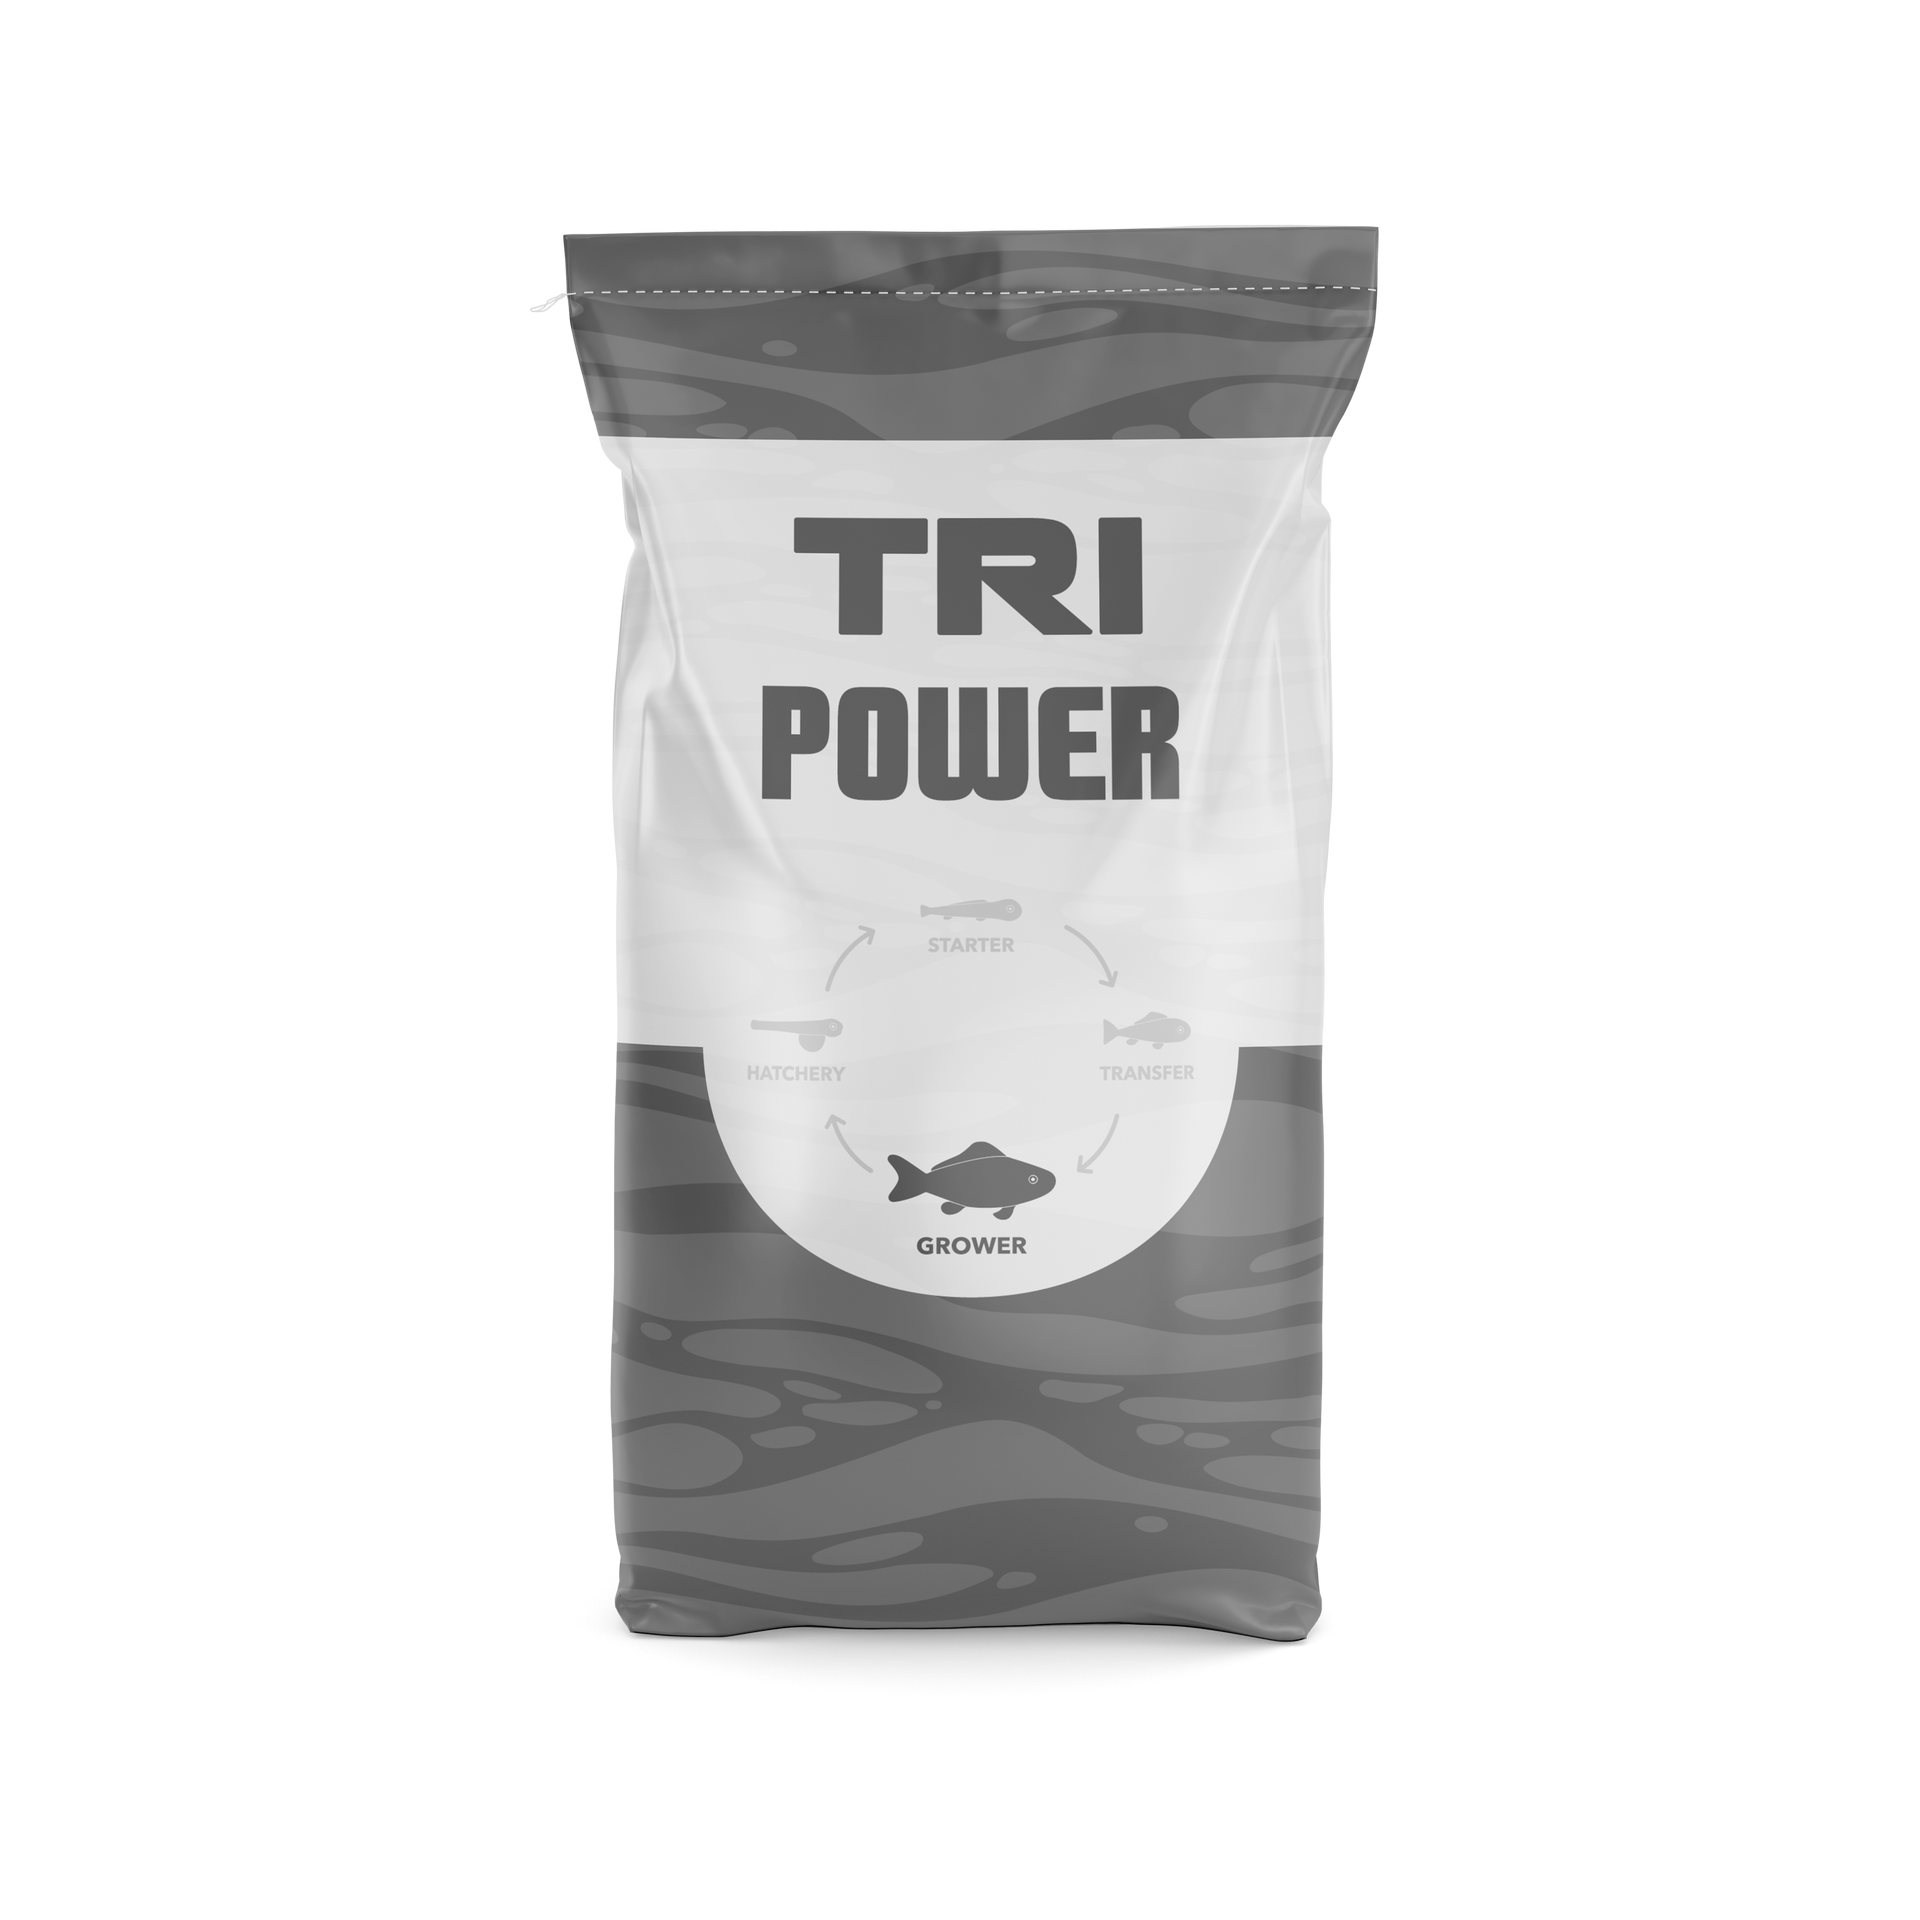 Power Tri standard performance feed for triploid salmon